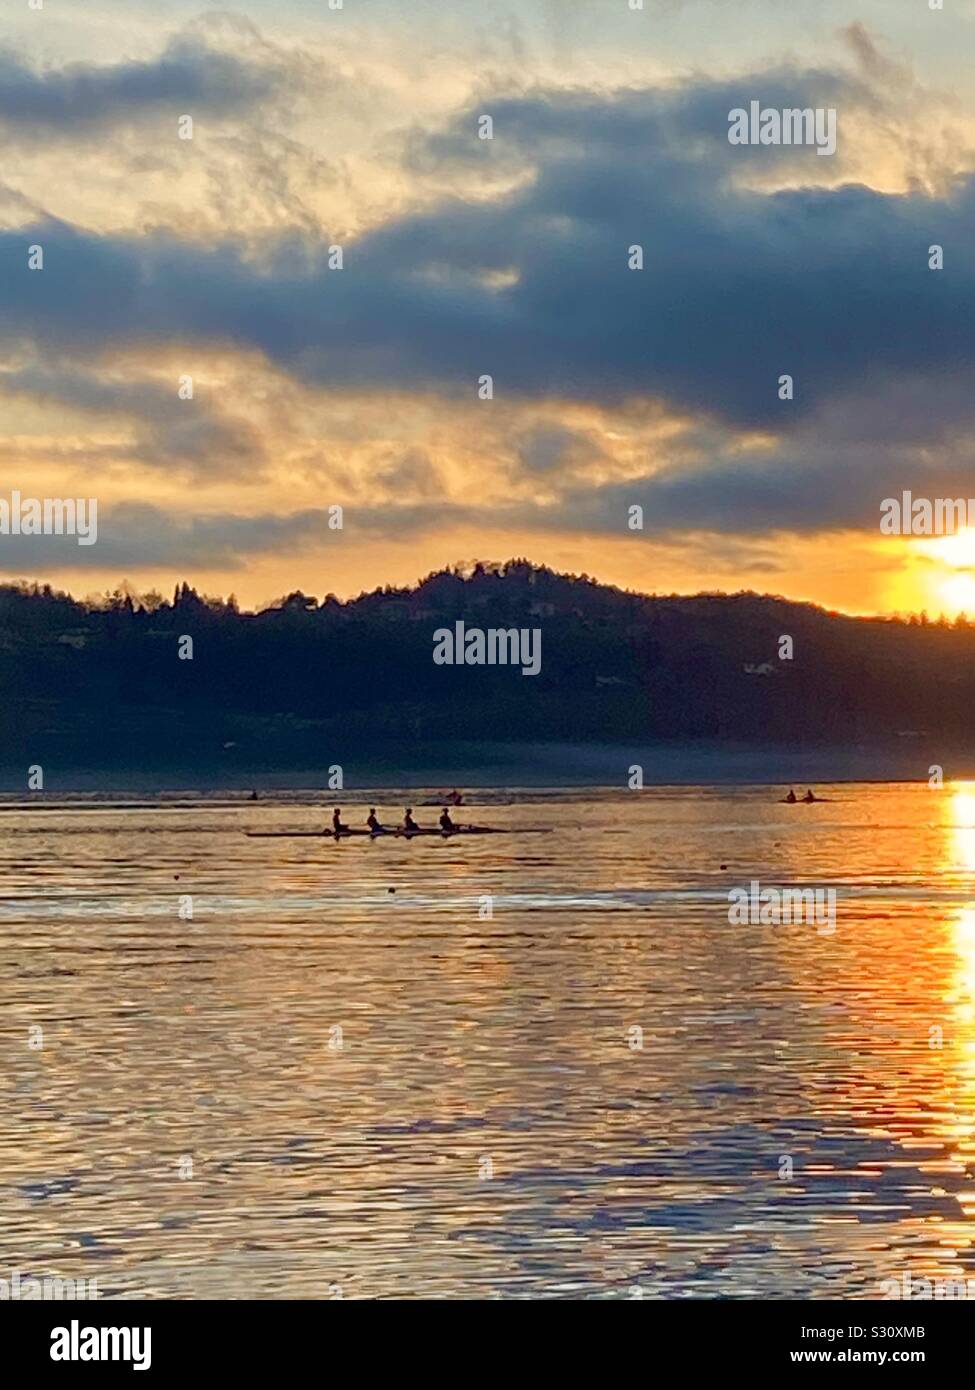 Lago di Varese, Norditalien, Dezember Sonnenuntergang Stockfoto